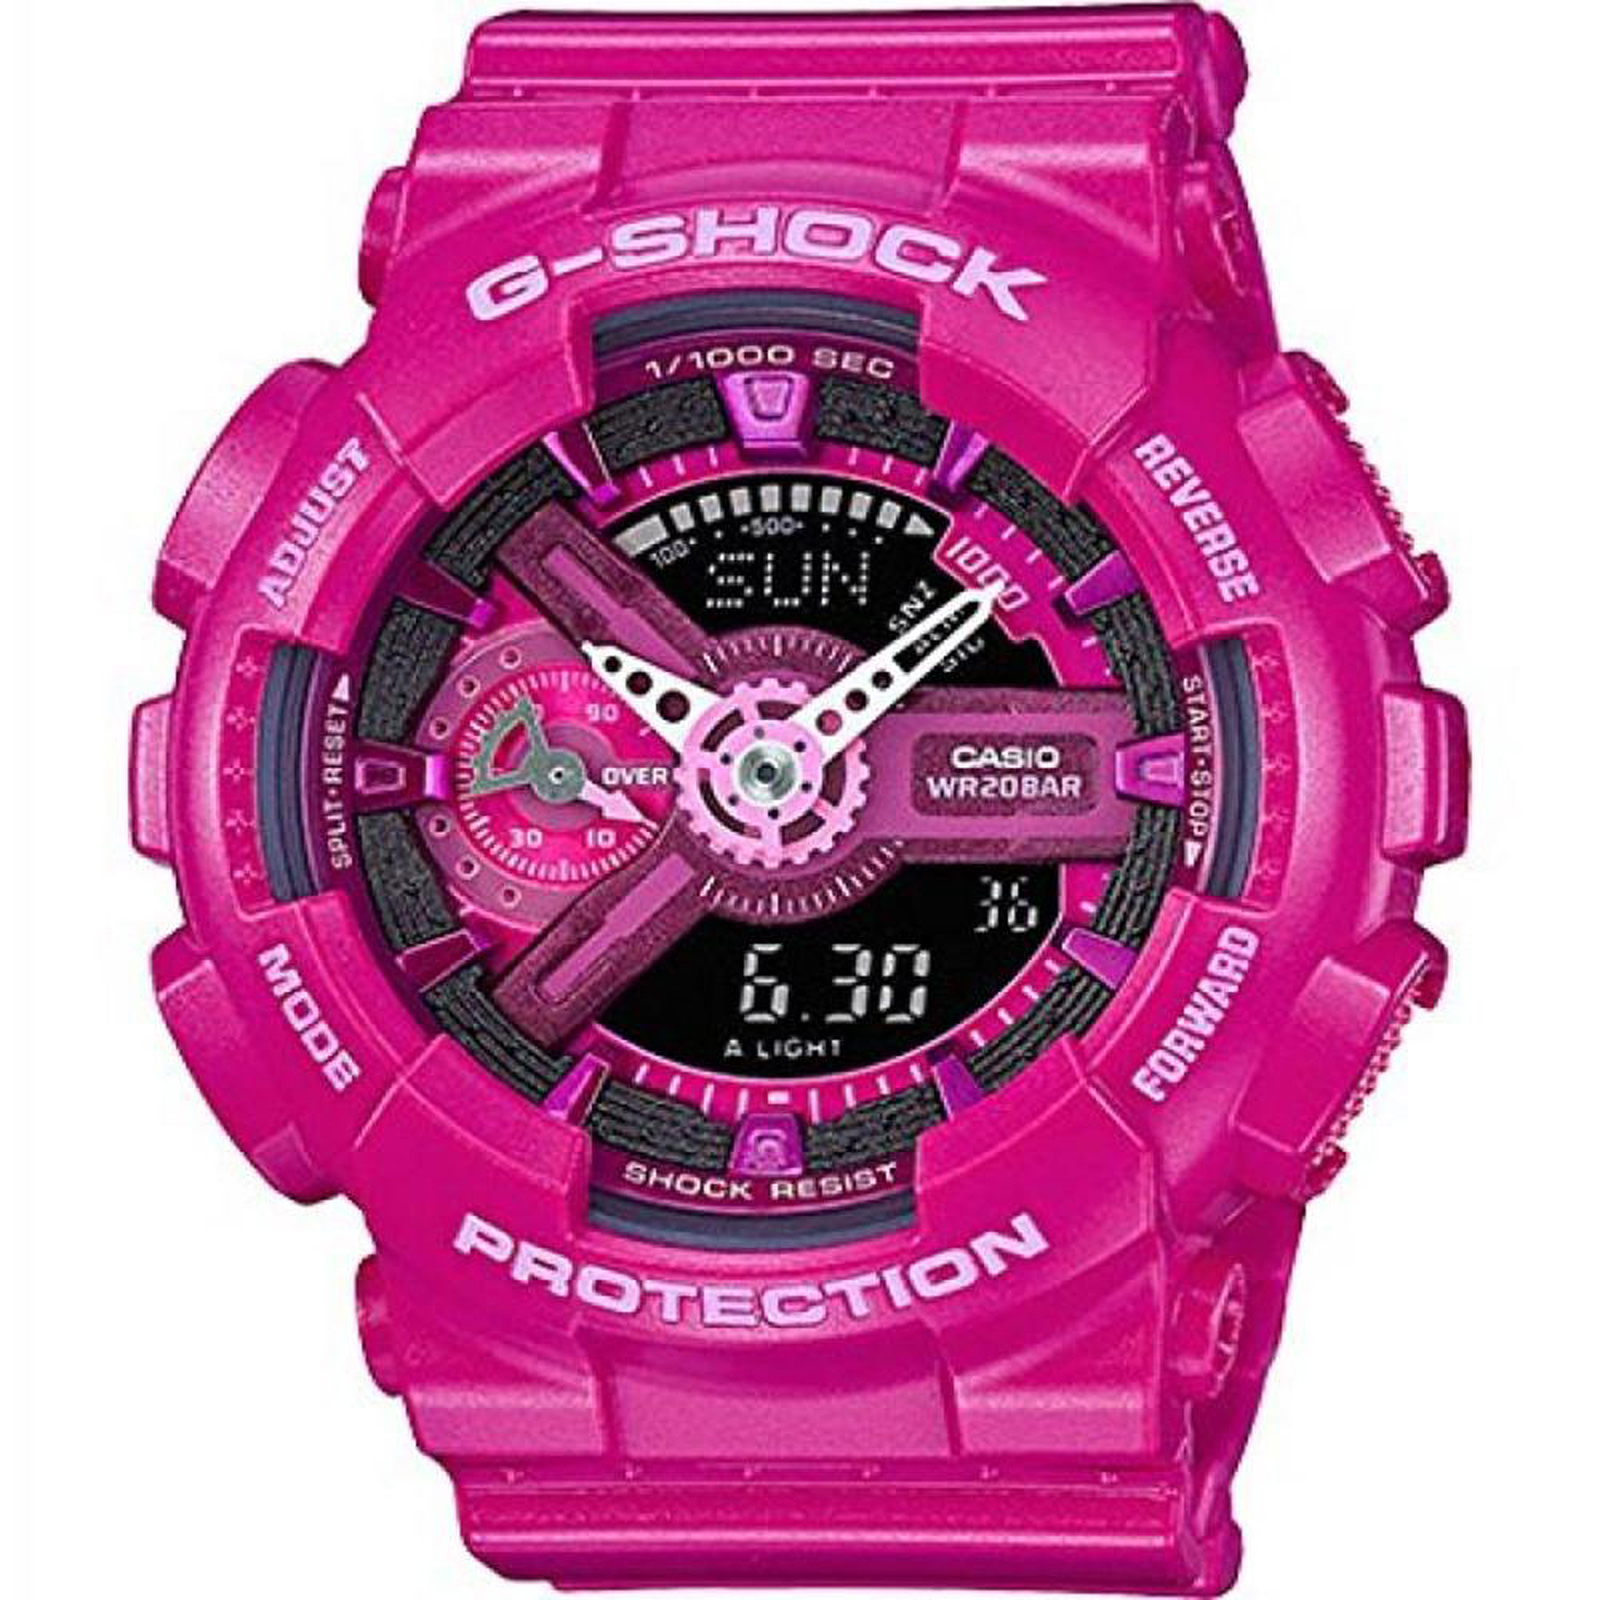 Casio Women’s G-Shock Resin Analog Digital Watch - Pink